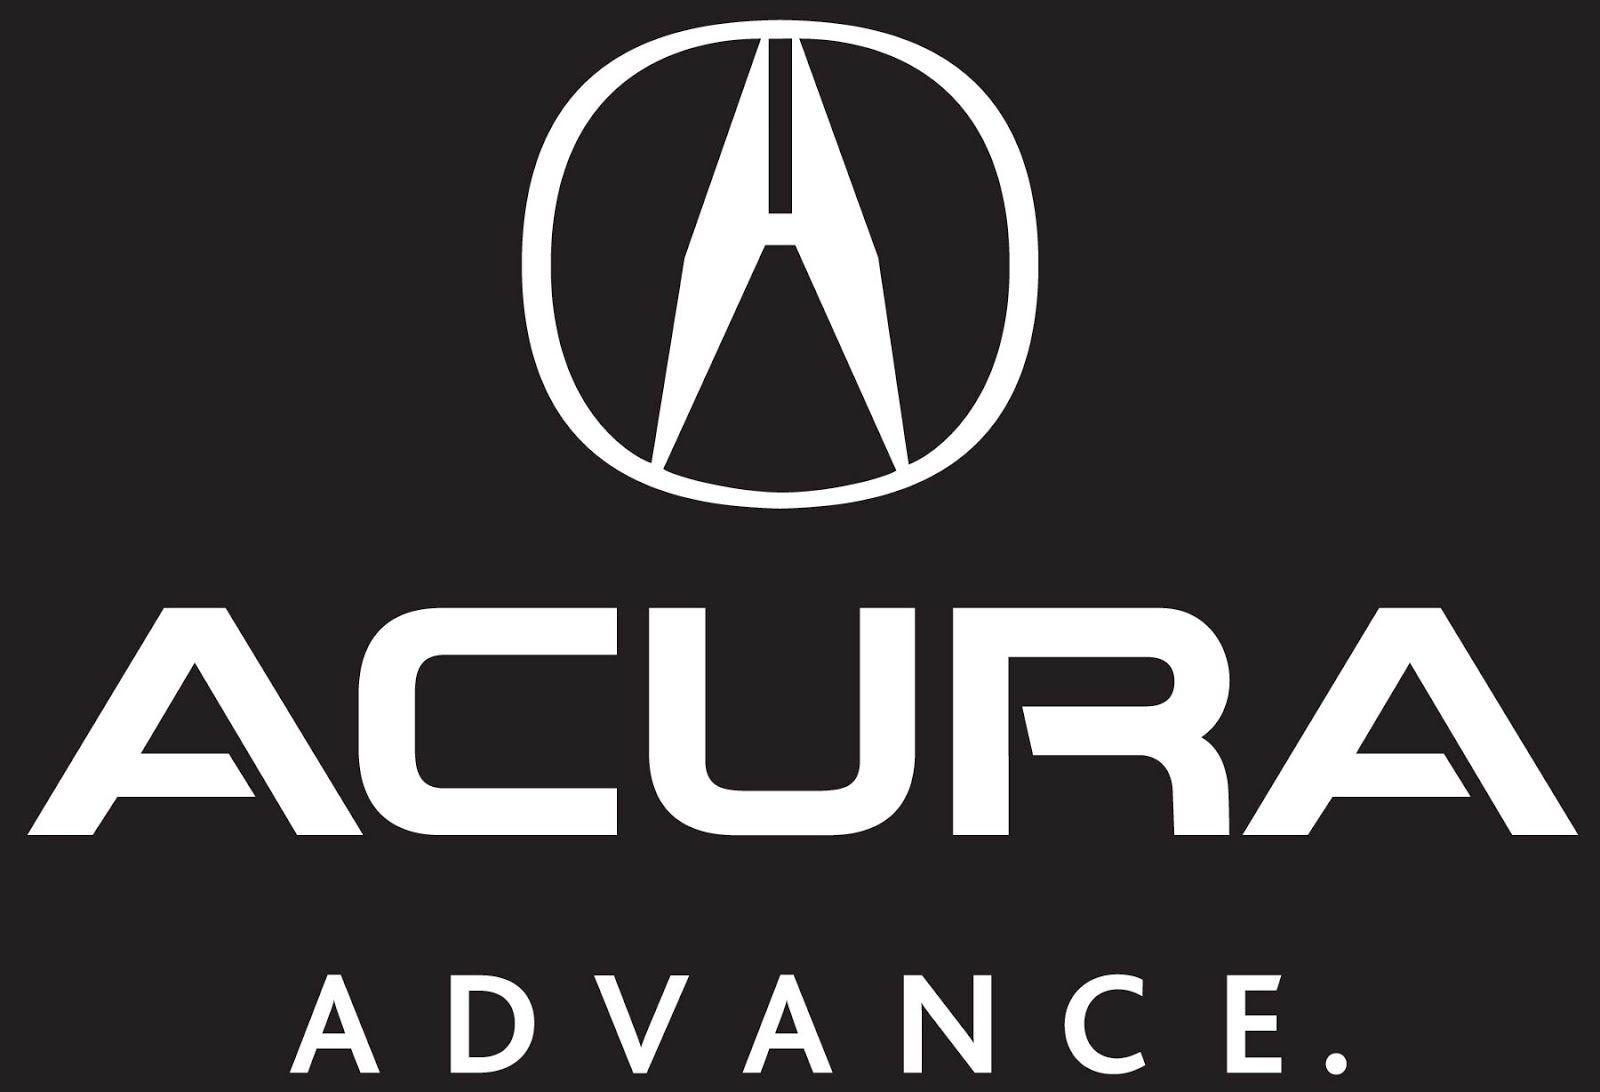 Acura Logo - Acura Logo, Acura Car Symbol Meaning and History | Car Brand Names.com